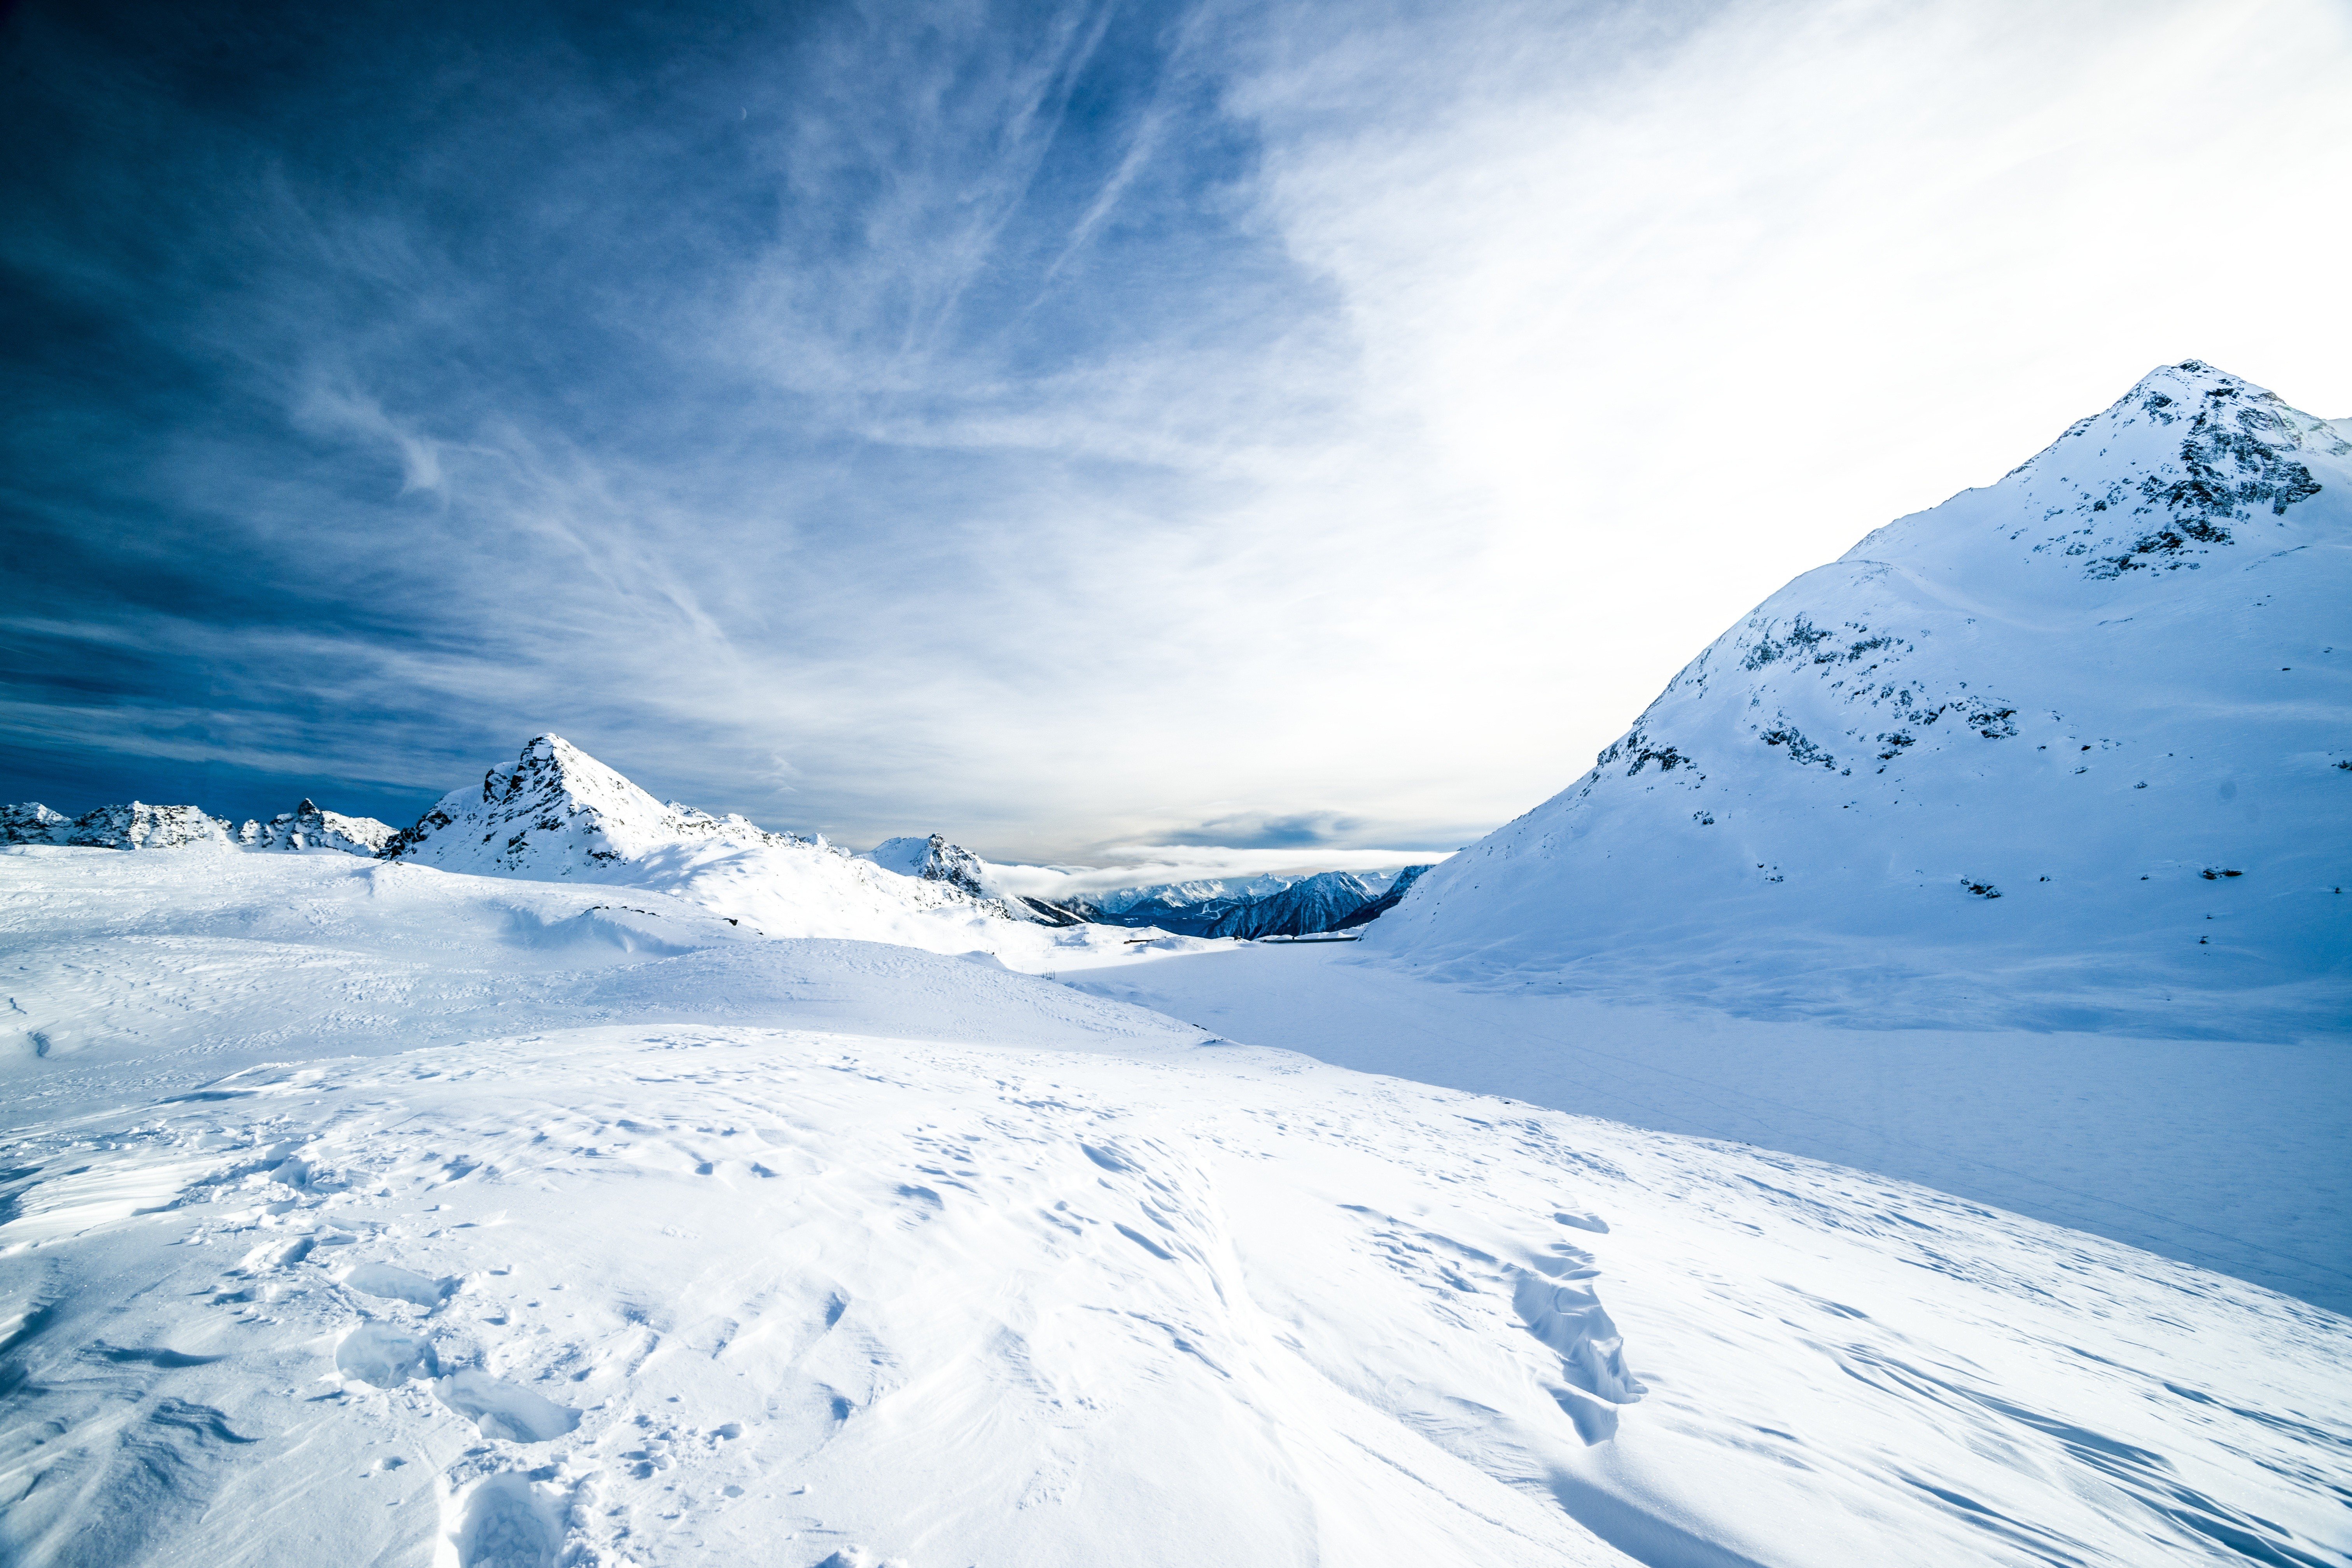  landscape  Snow  HD Wallpapers Desktop and Mobile Images 